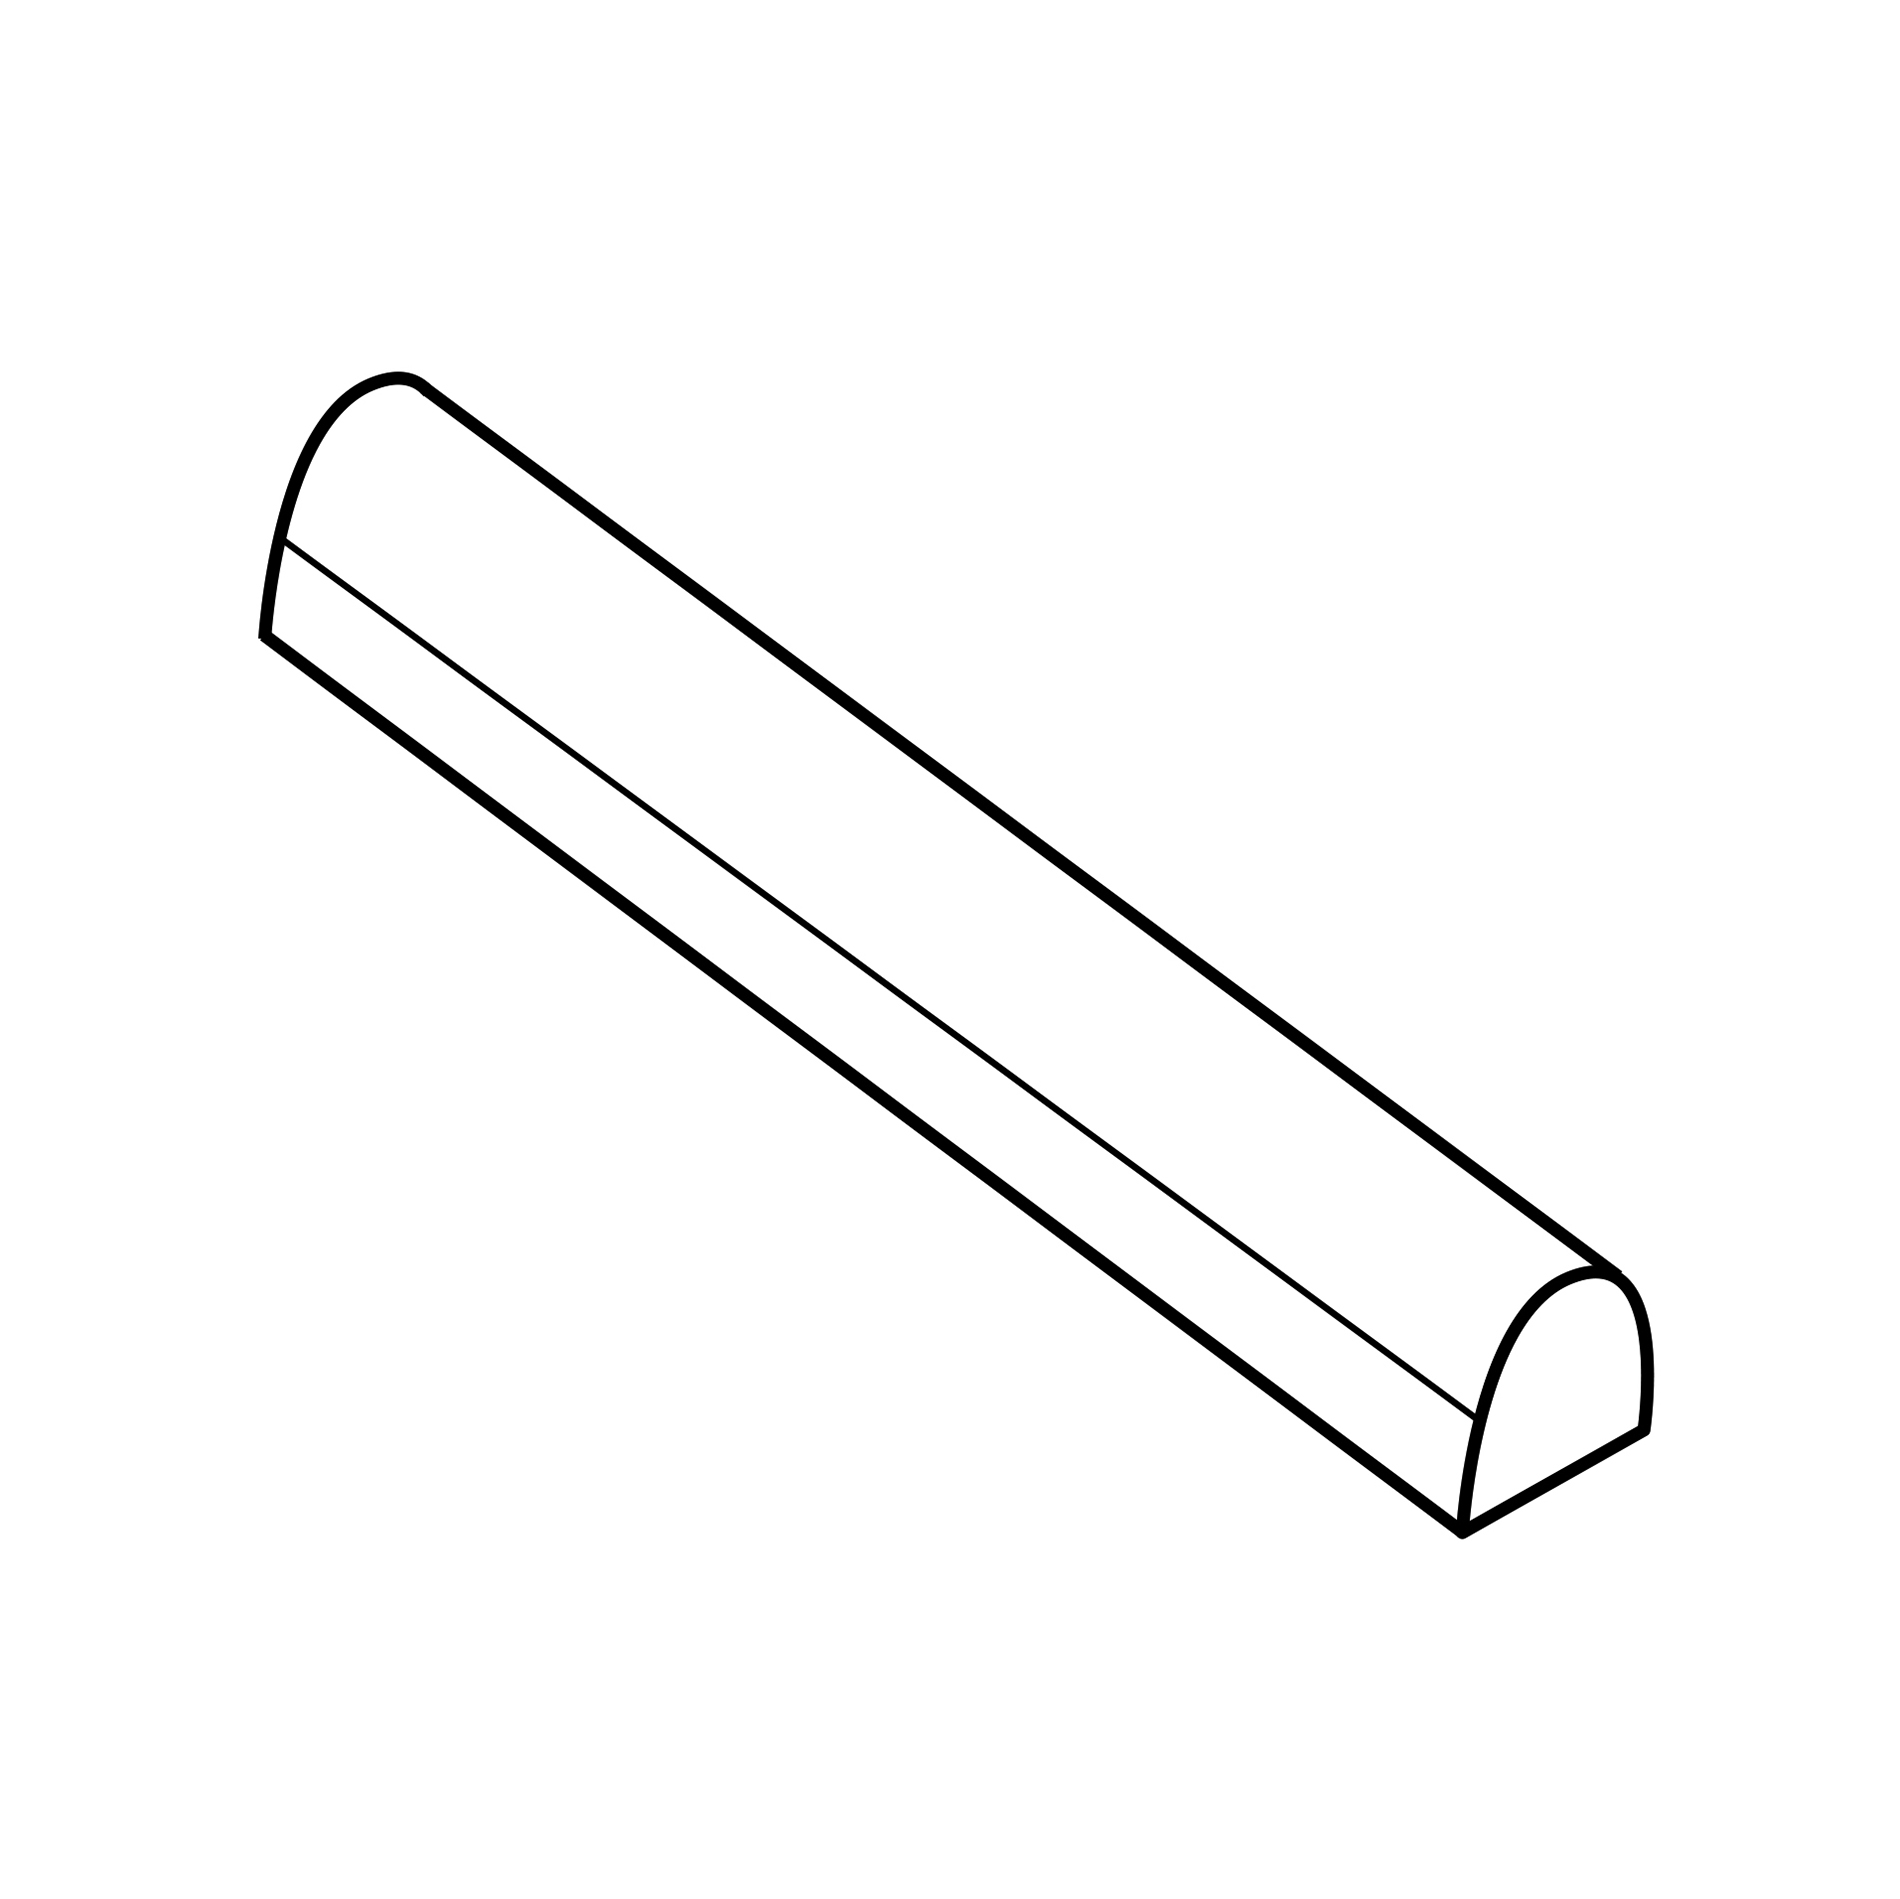 CLP-Lanc Pencil  (Copy)